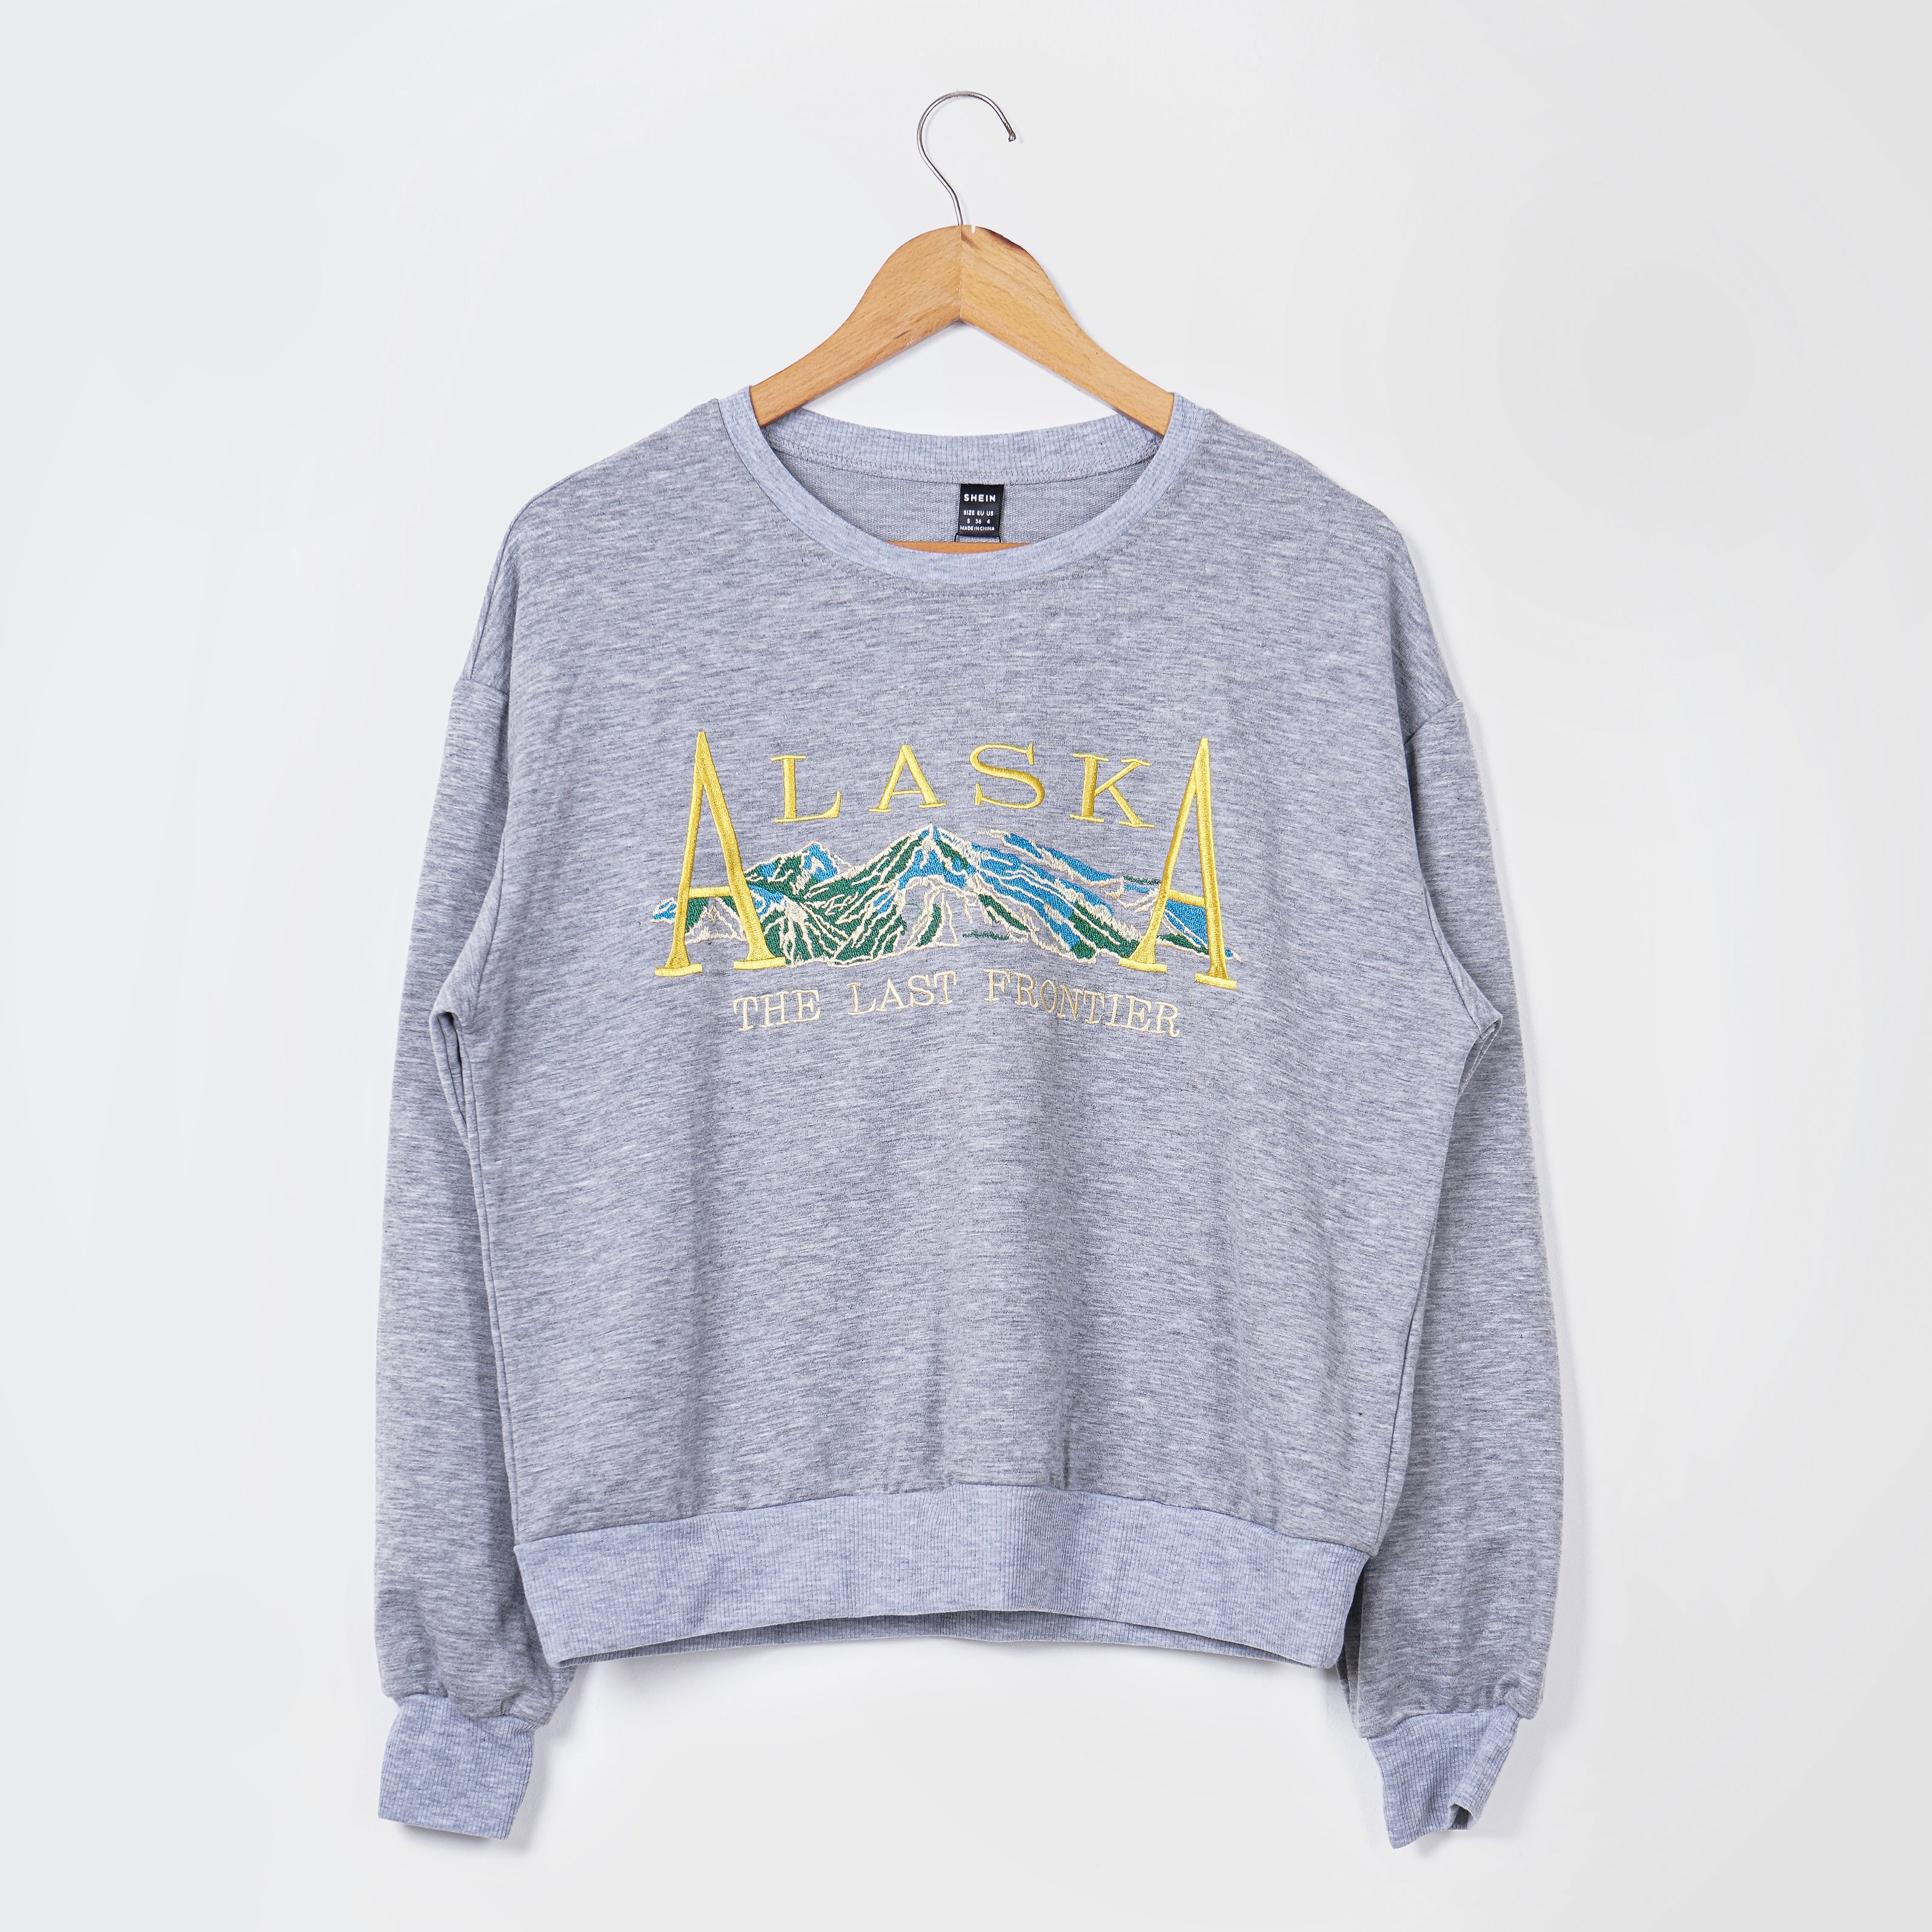 Shein Printed Comfy Sweatshirt for Kids - Marca Deals - Shein